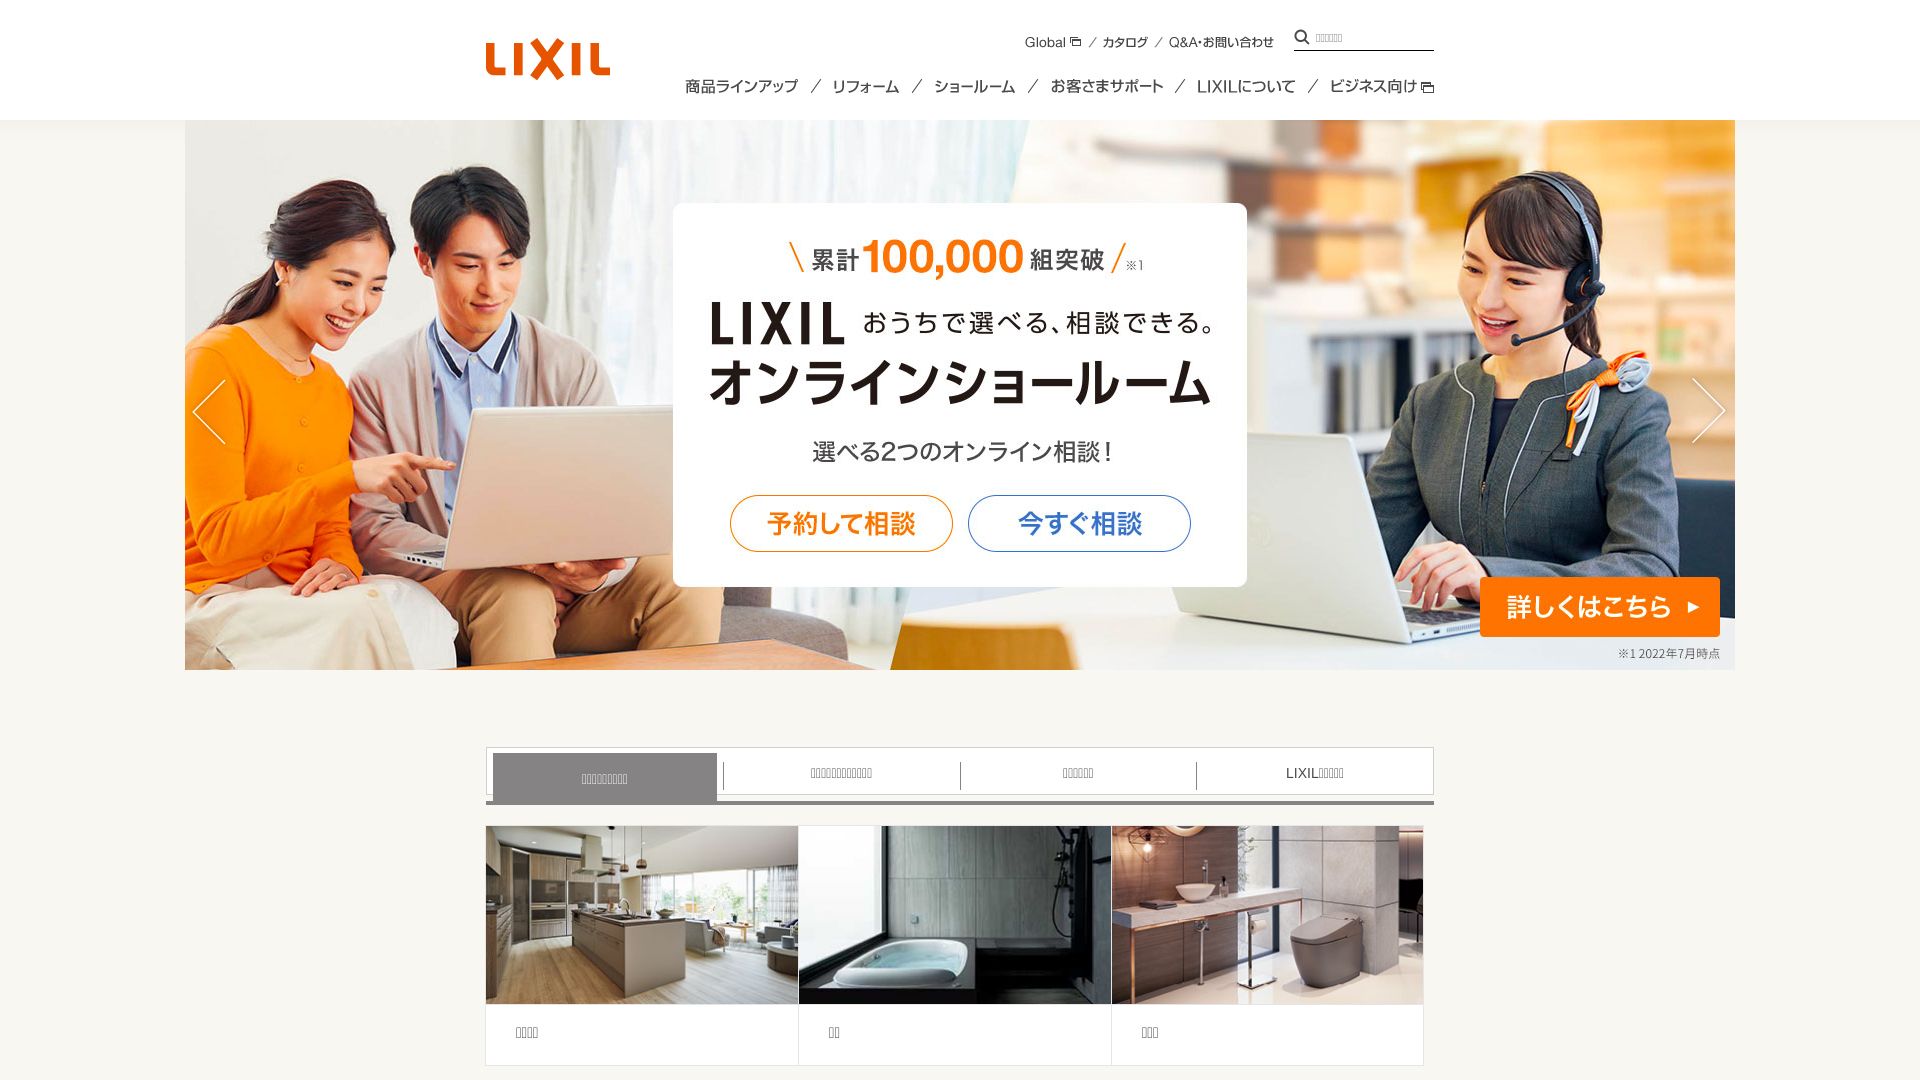 Webseitenstatus lixil.co.jp ist   ONLINE